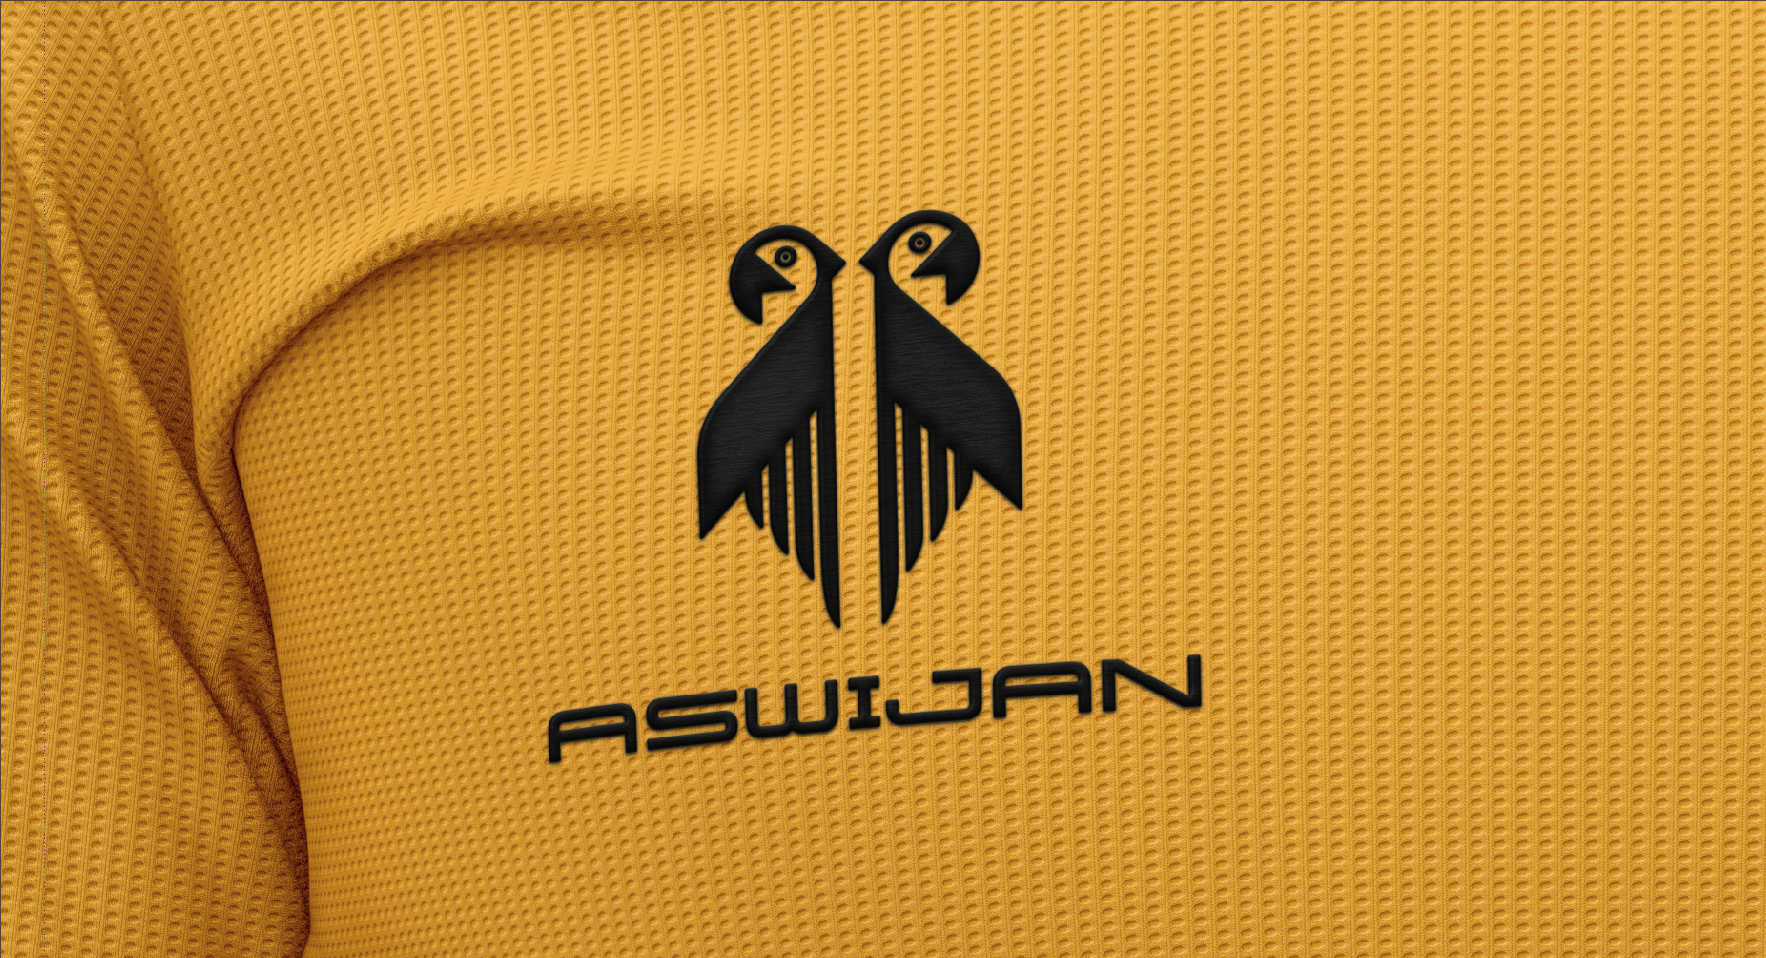 Aswijan Sport